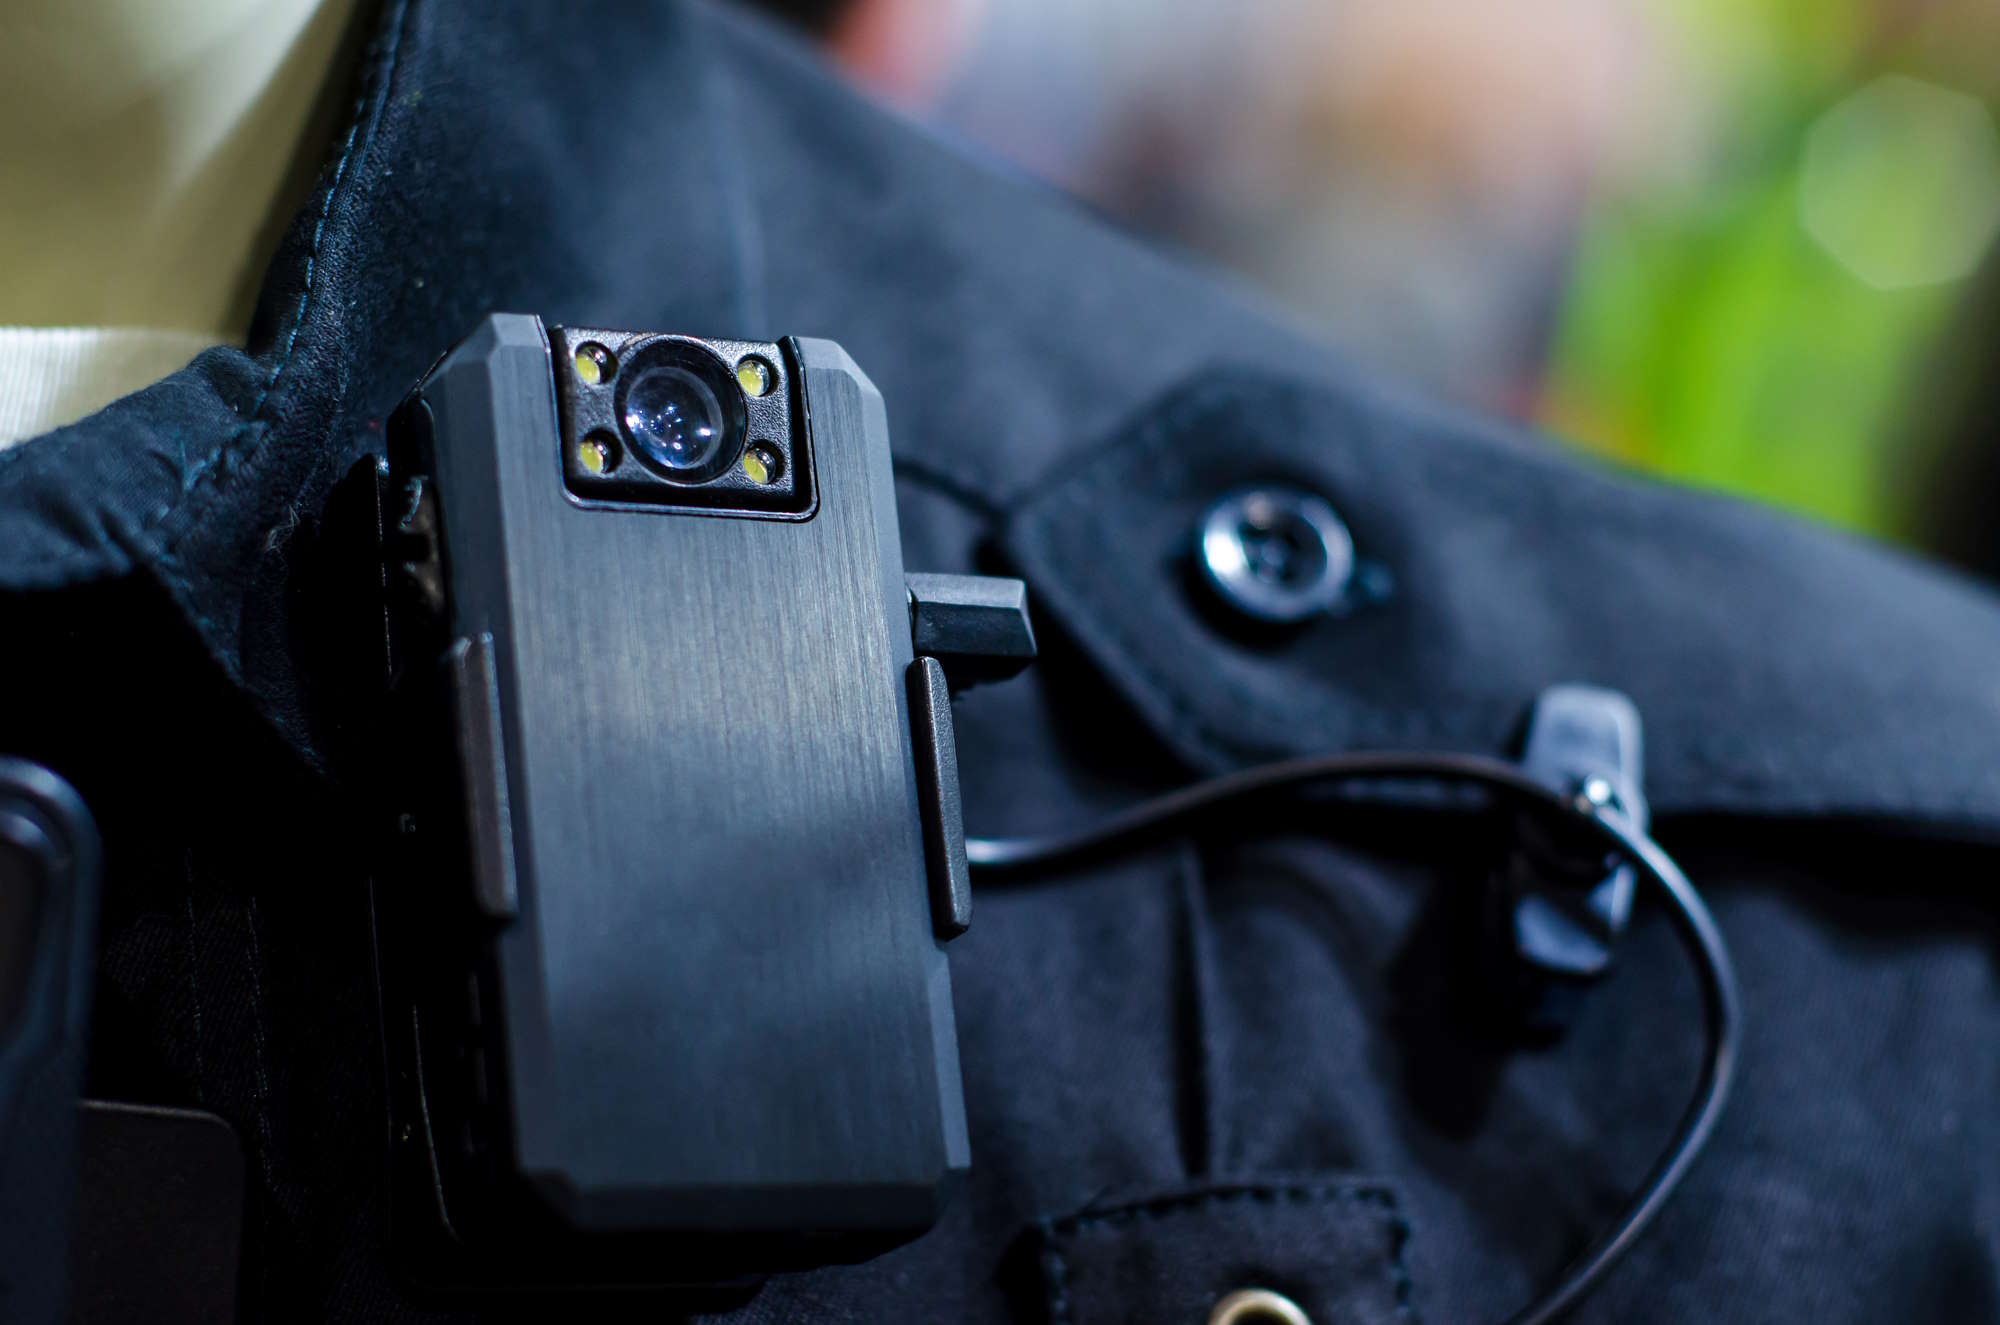 How Can Body Worn Cameras Maximize Police Accountability